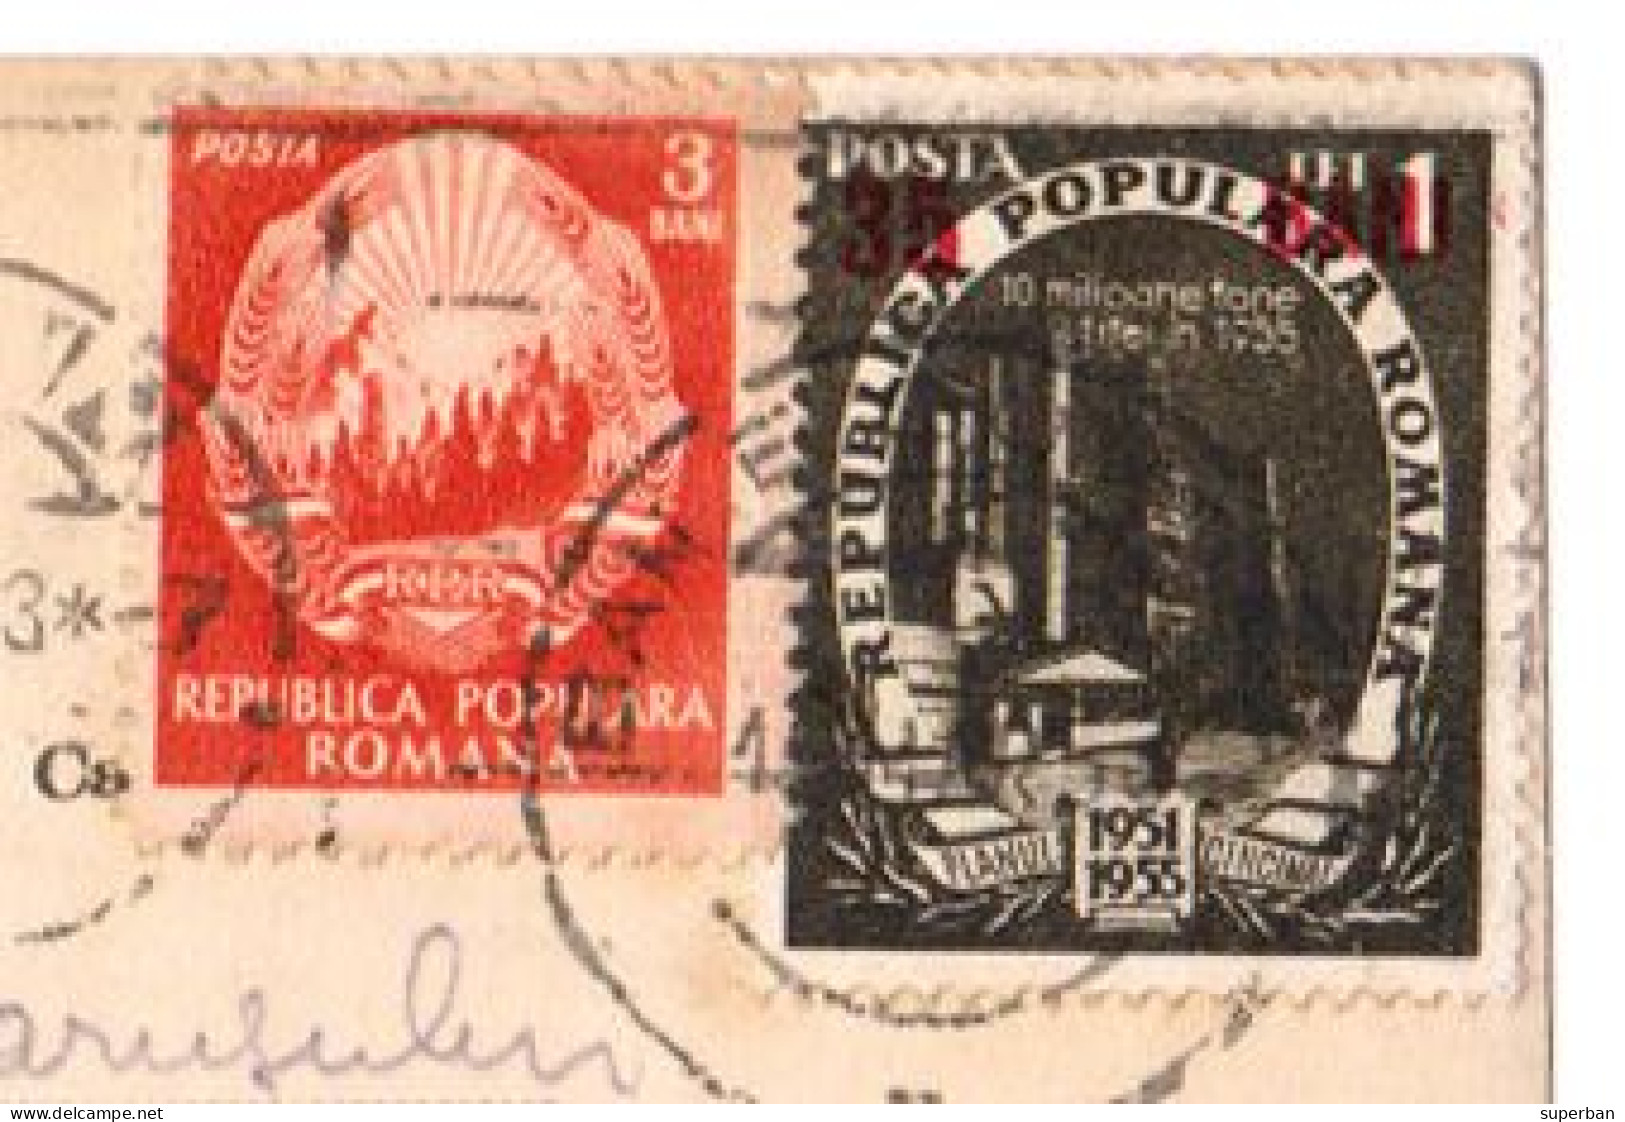 ROMANIA : 1952 - STABILIZAREA MONETARA / MONETARY STABILIZATION - POSTCARD MAILED With OVERPRINTED STAMPS - RRR (am158) - Storia Postale